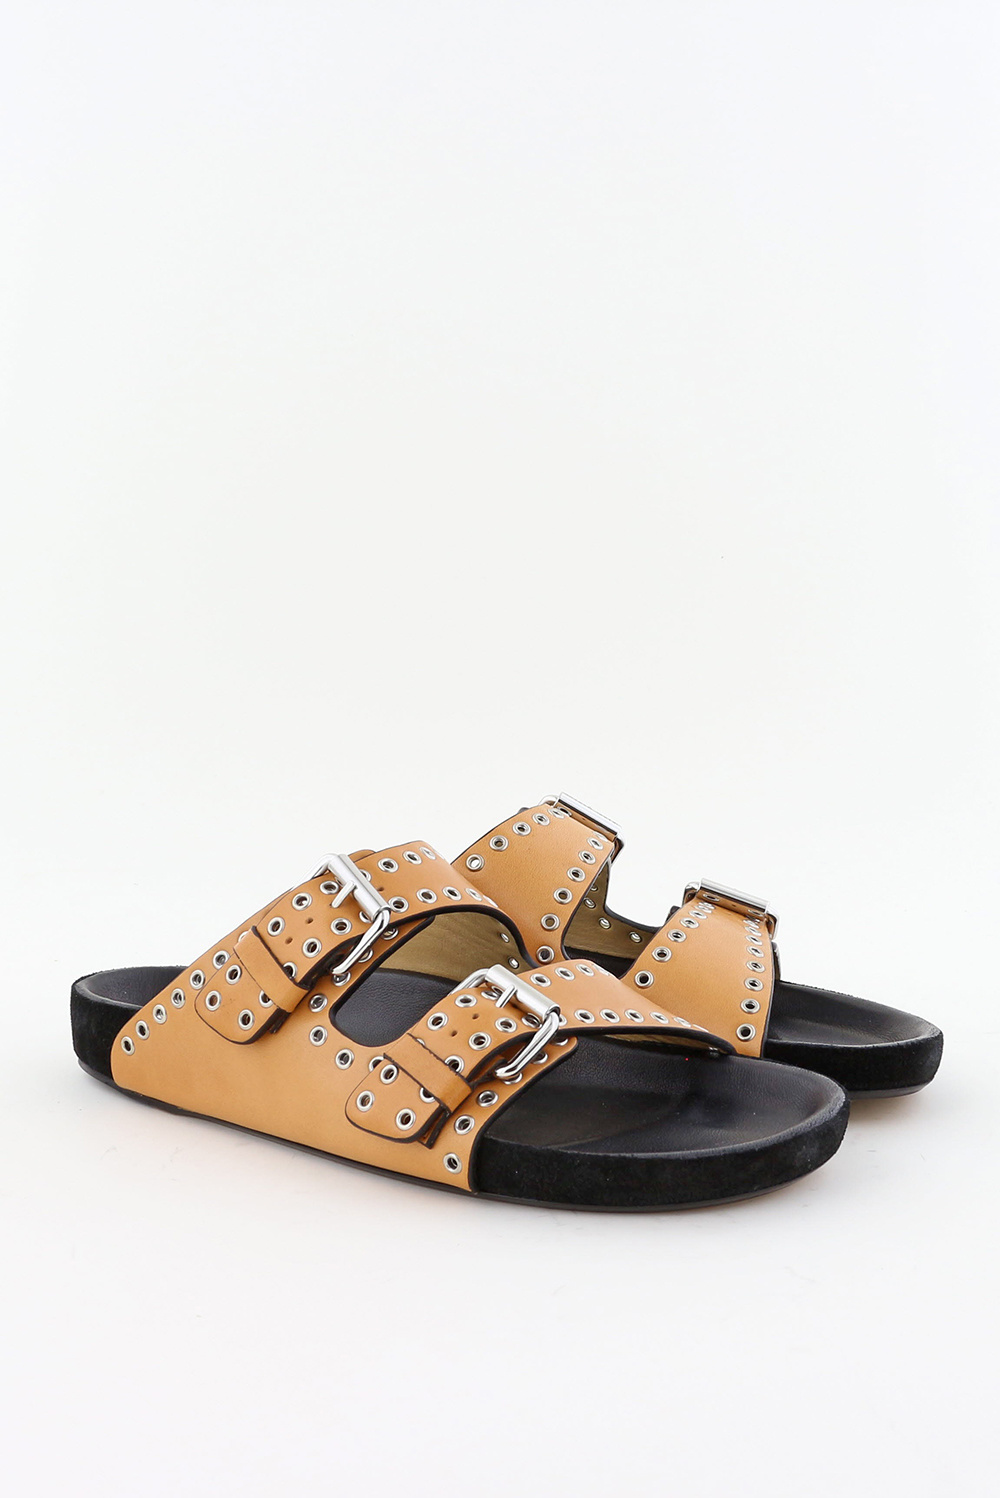 Isabel Marant sandals Lennyo SD0462-22P032S - Marjon Snieders